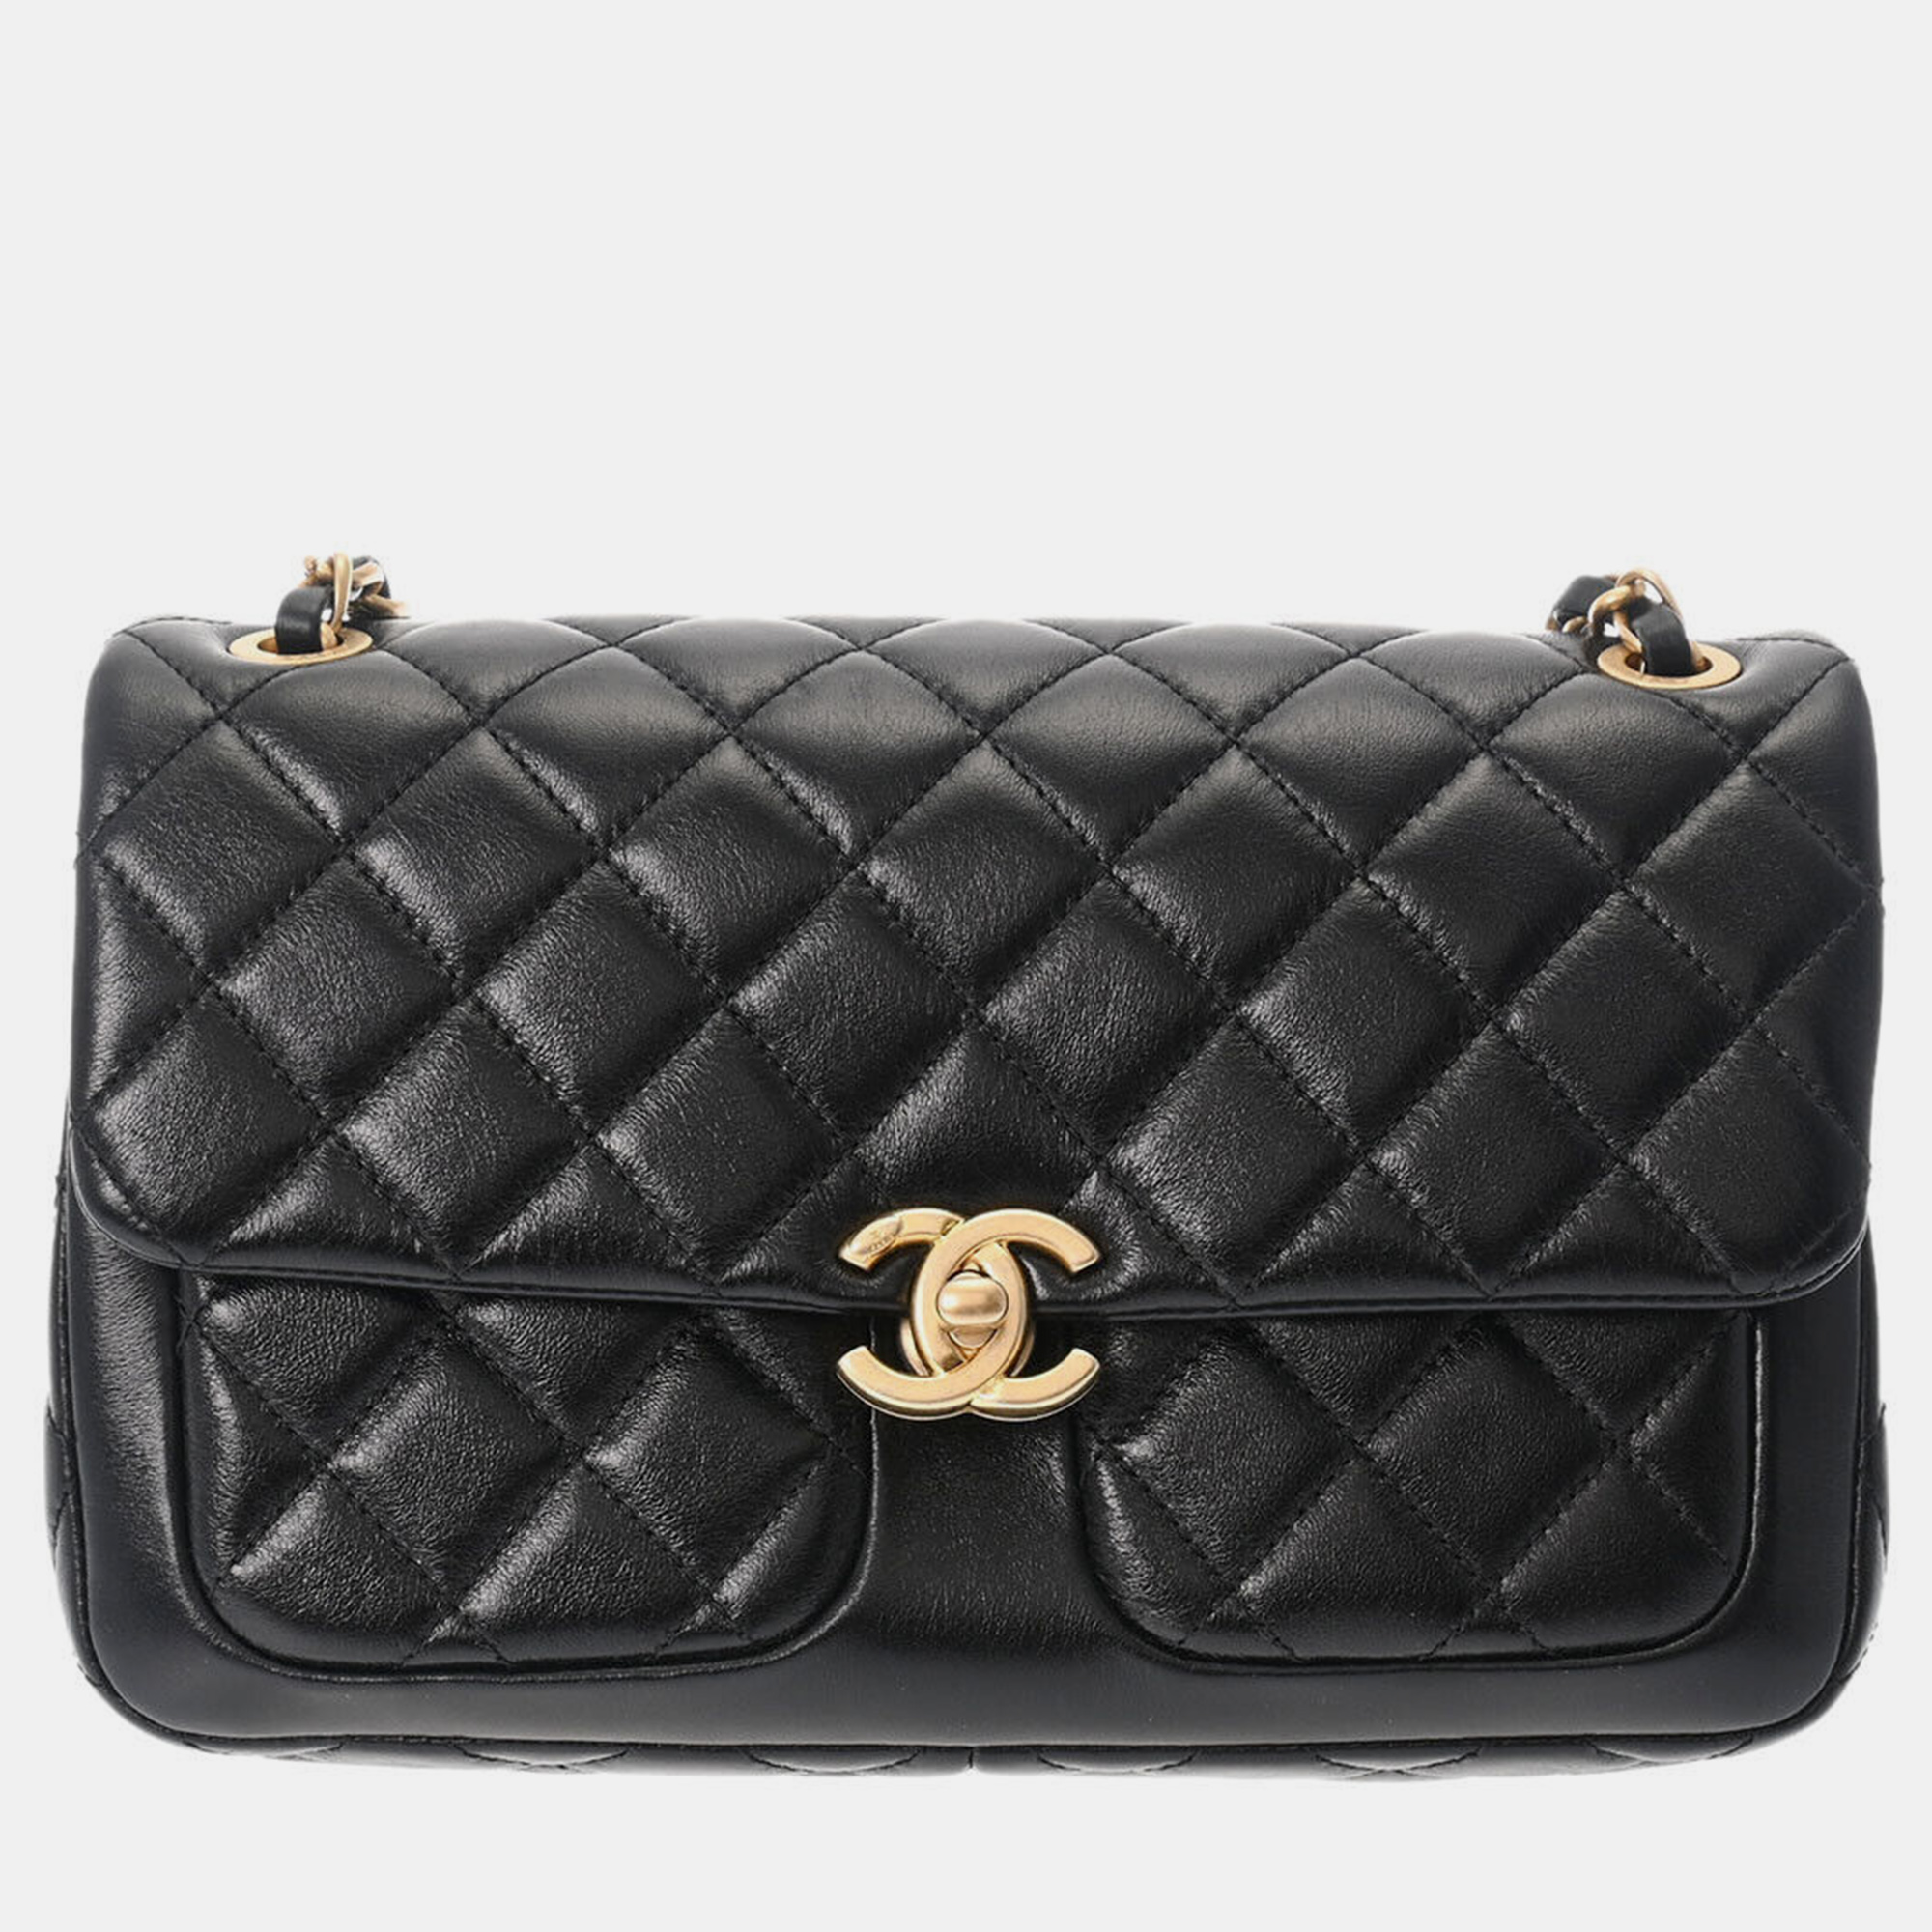 Chanel black leather rectangular flap bag